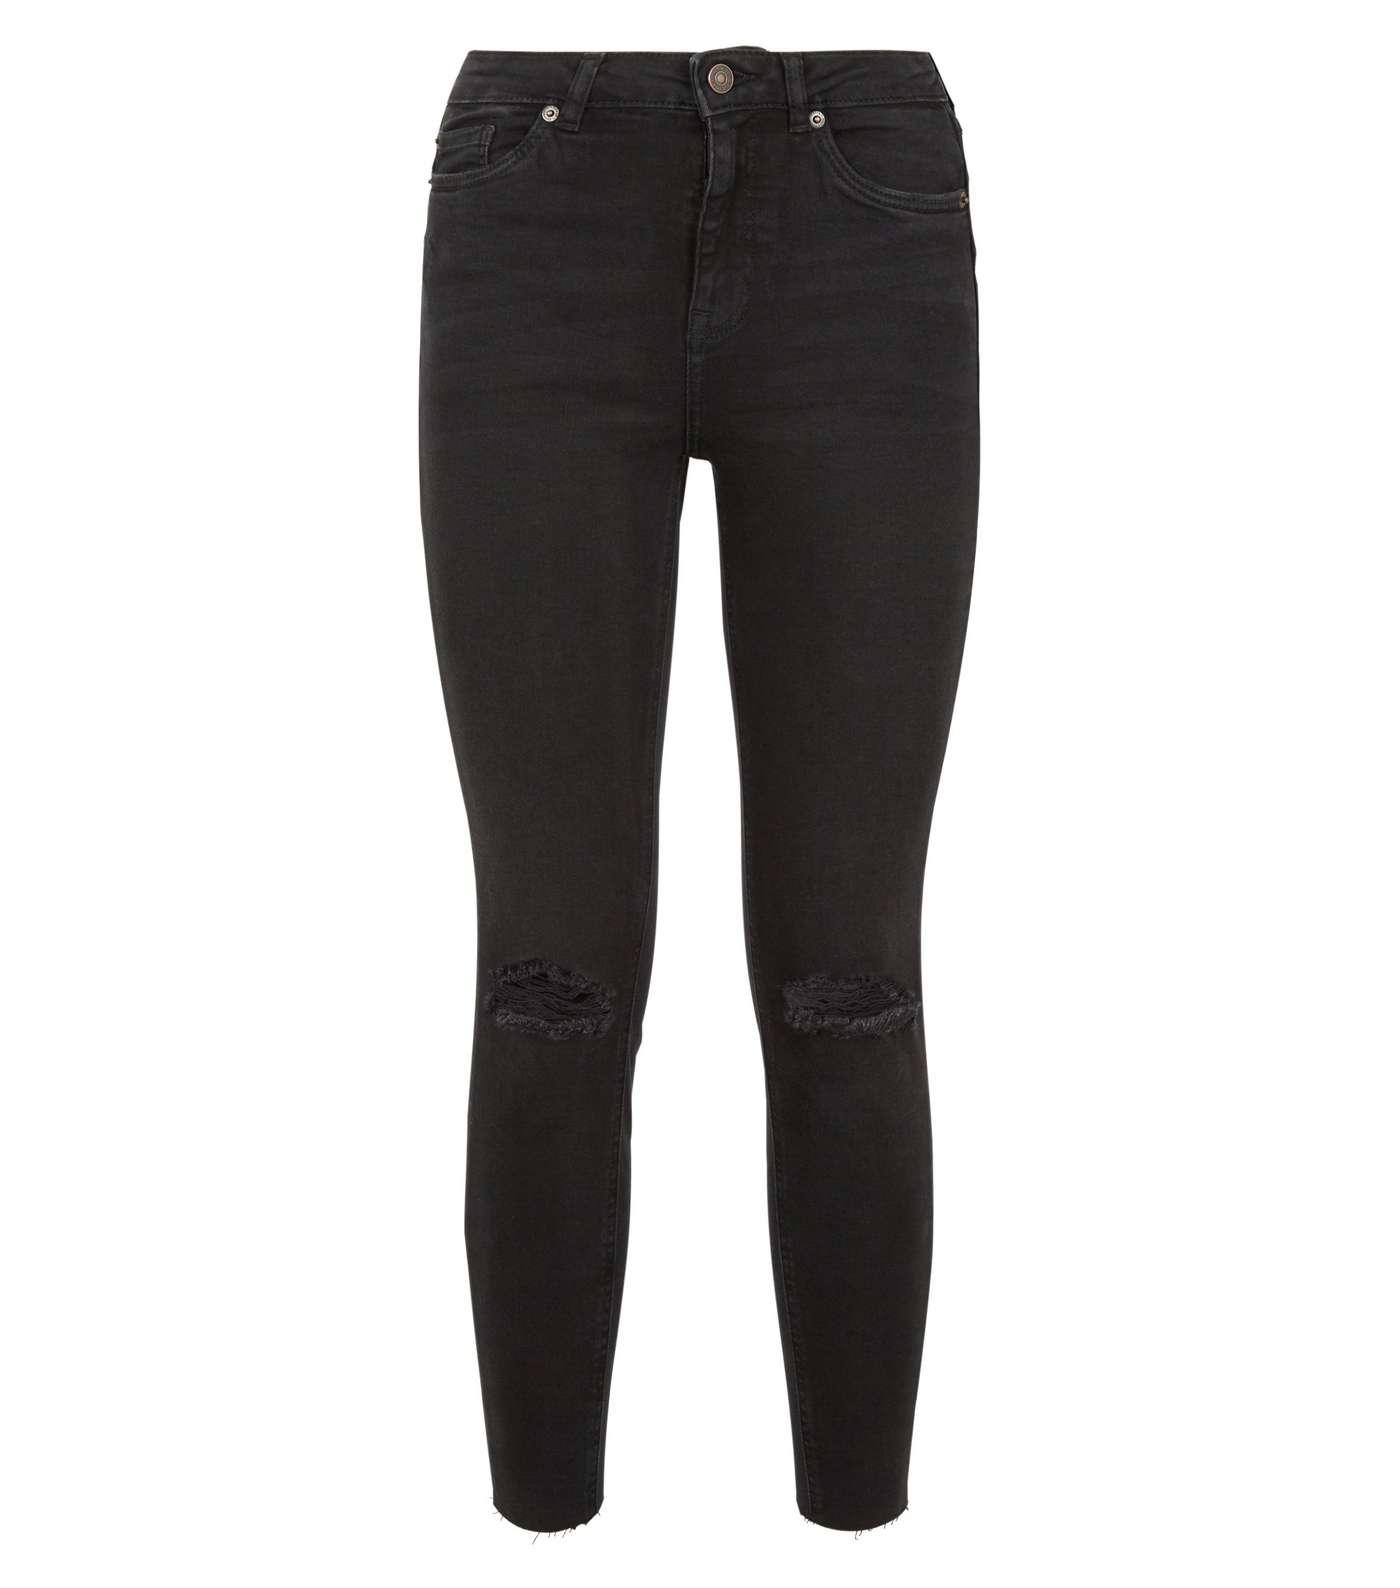 Black Lift & Shape Ripped Jenna Skinny Jeans Image 4